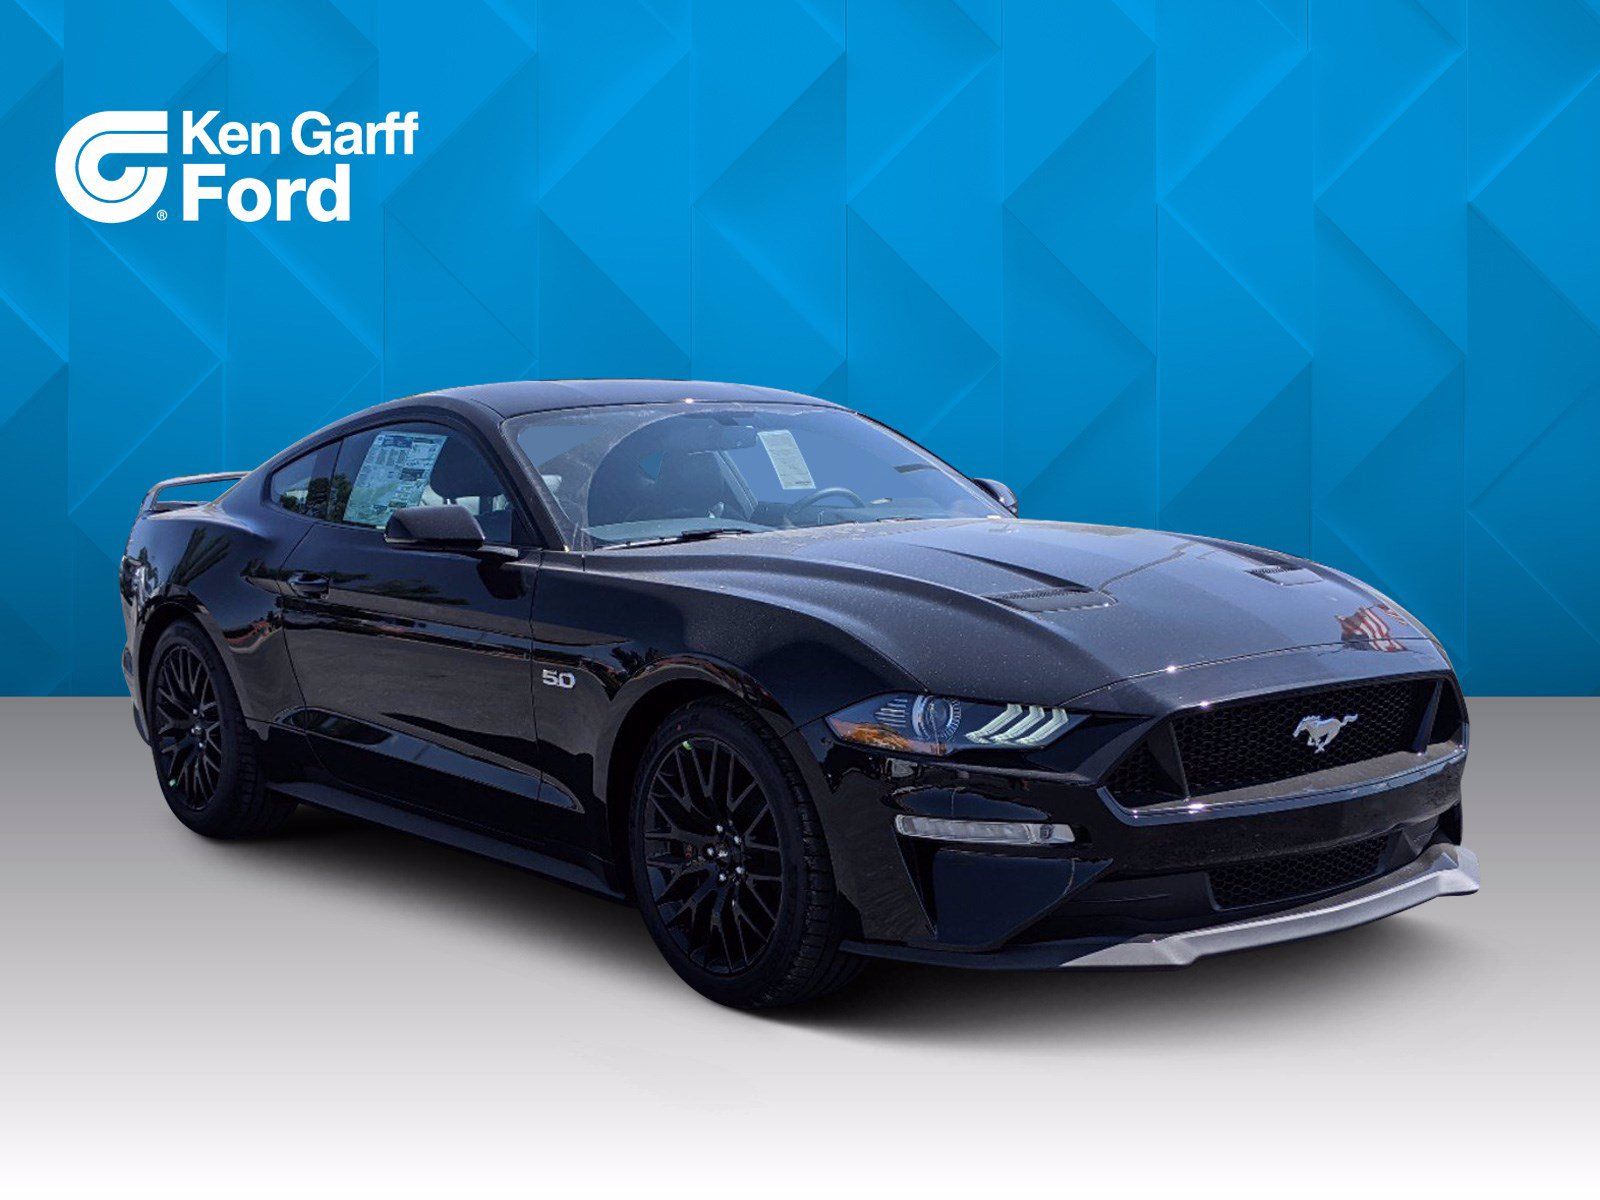 New 2020 Ford Mustang GT Premium 2dr Car #L5163217. Ken Garff Automotive Group